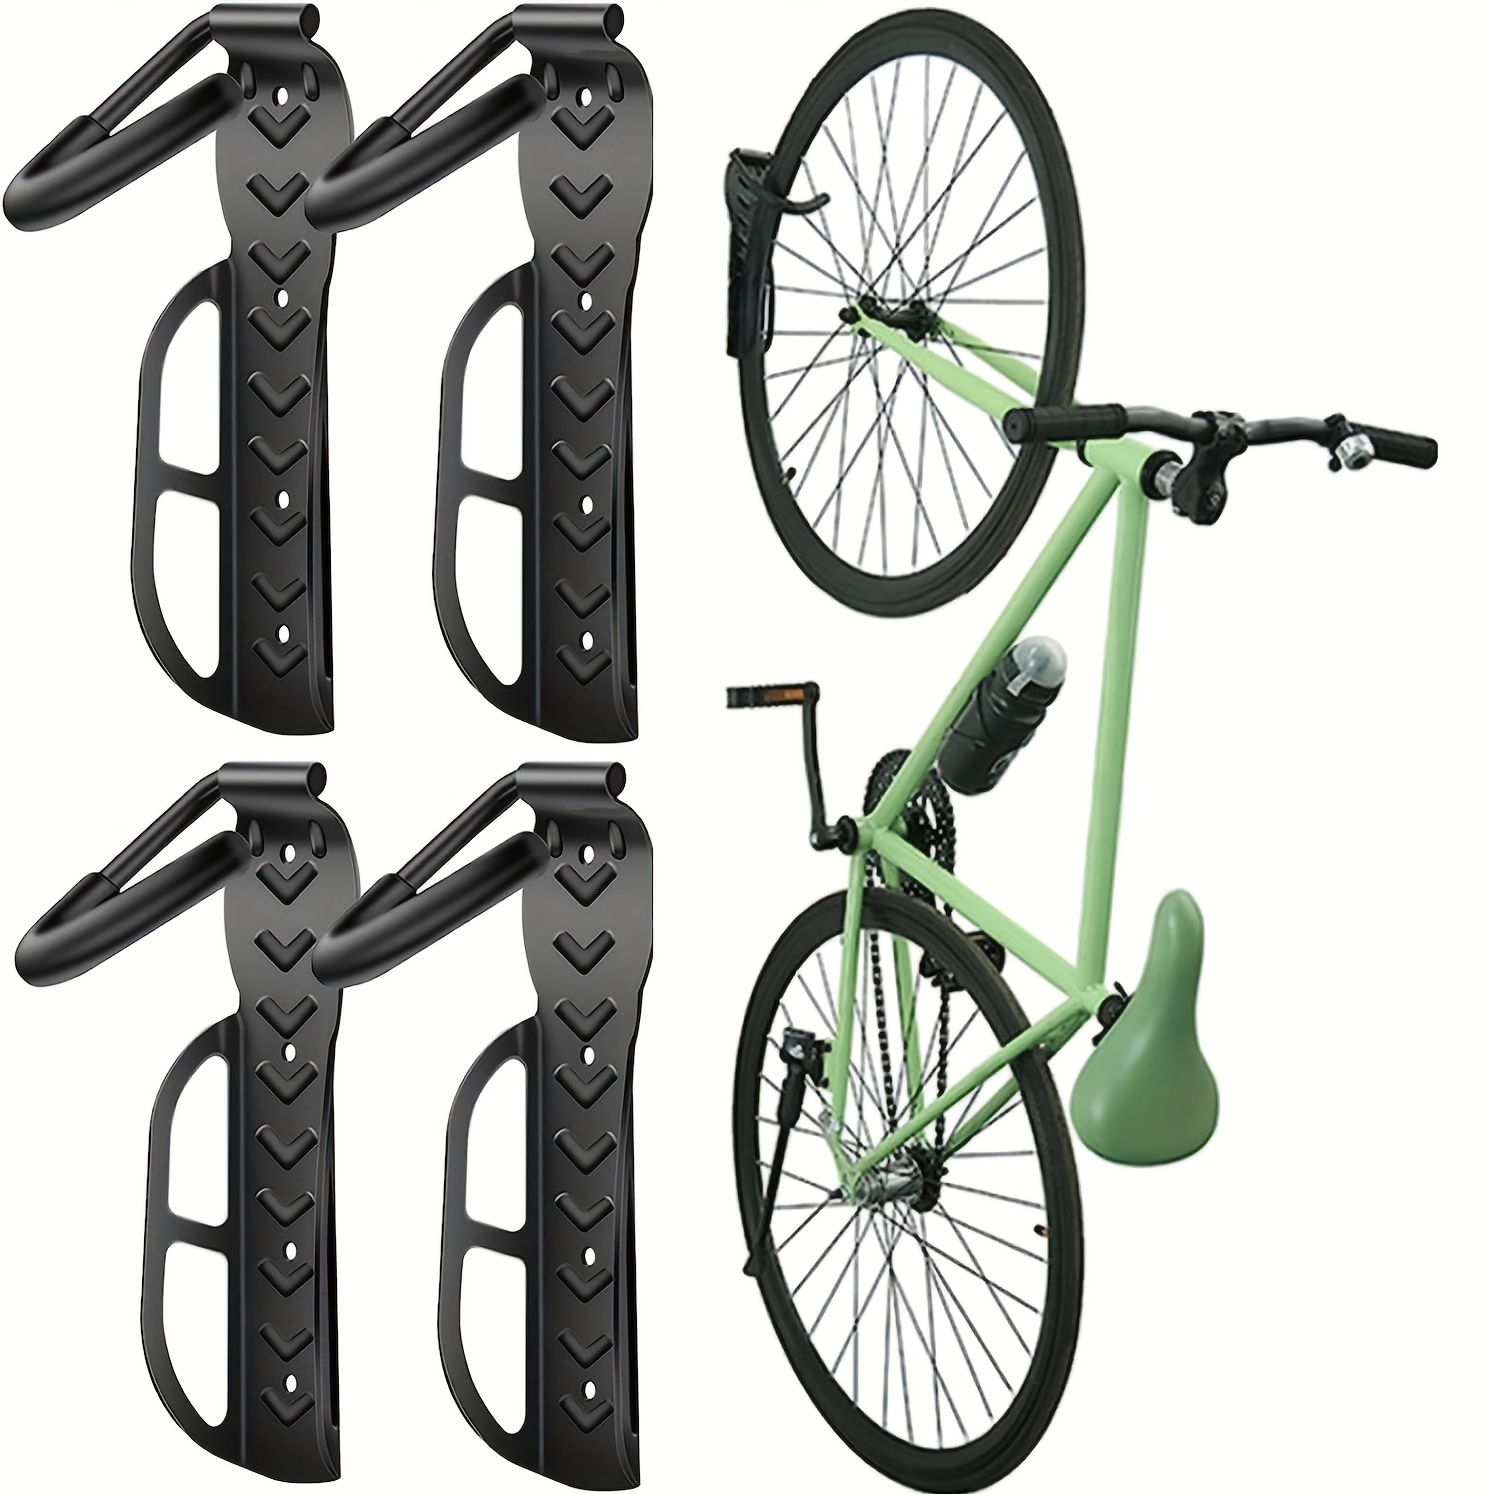 

Storage Vertical Bicycle Hook For Indoor, Shed Wall Mount Hook Rack Holder, Steel Sturdy Bike Hanger